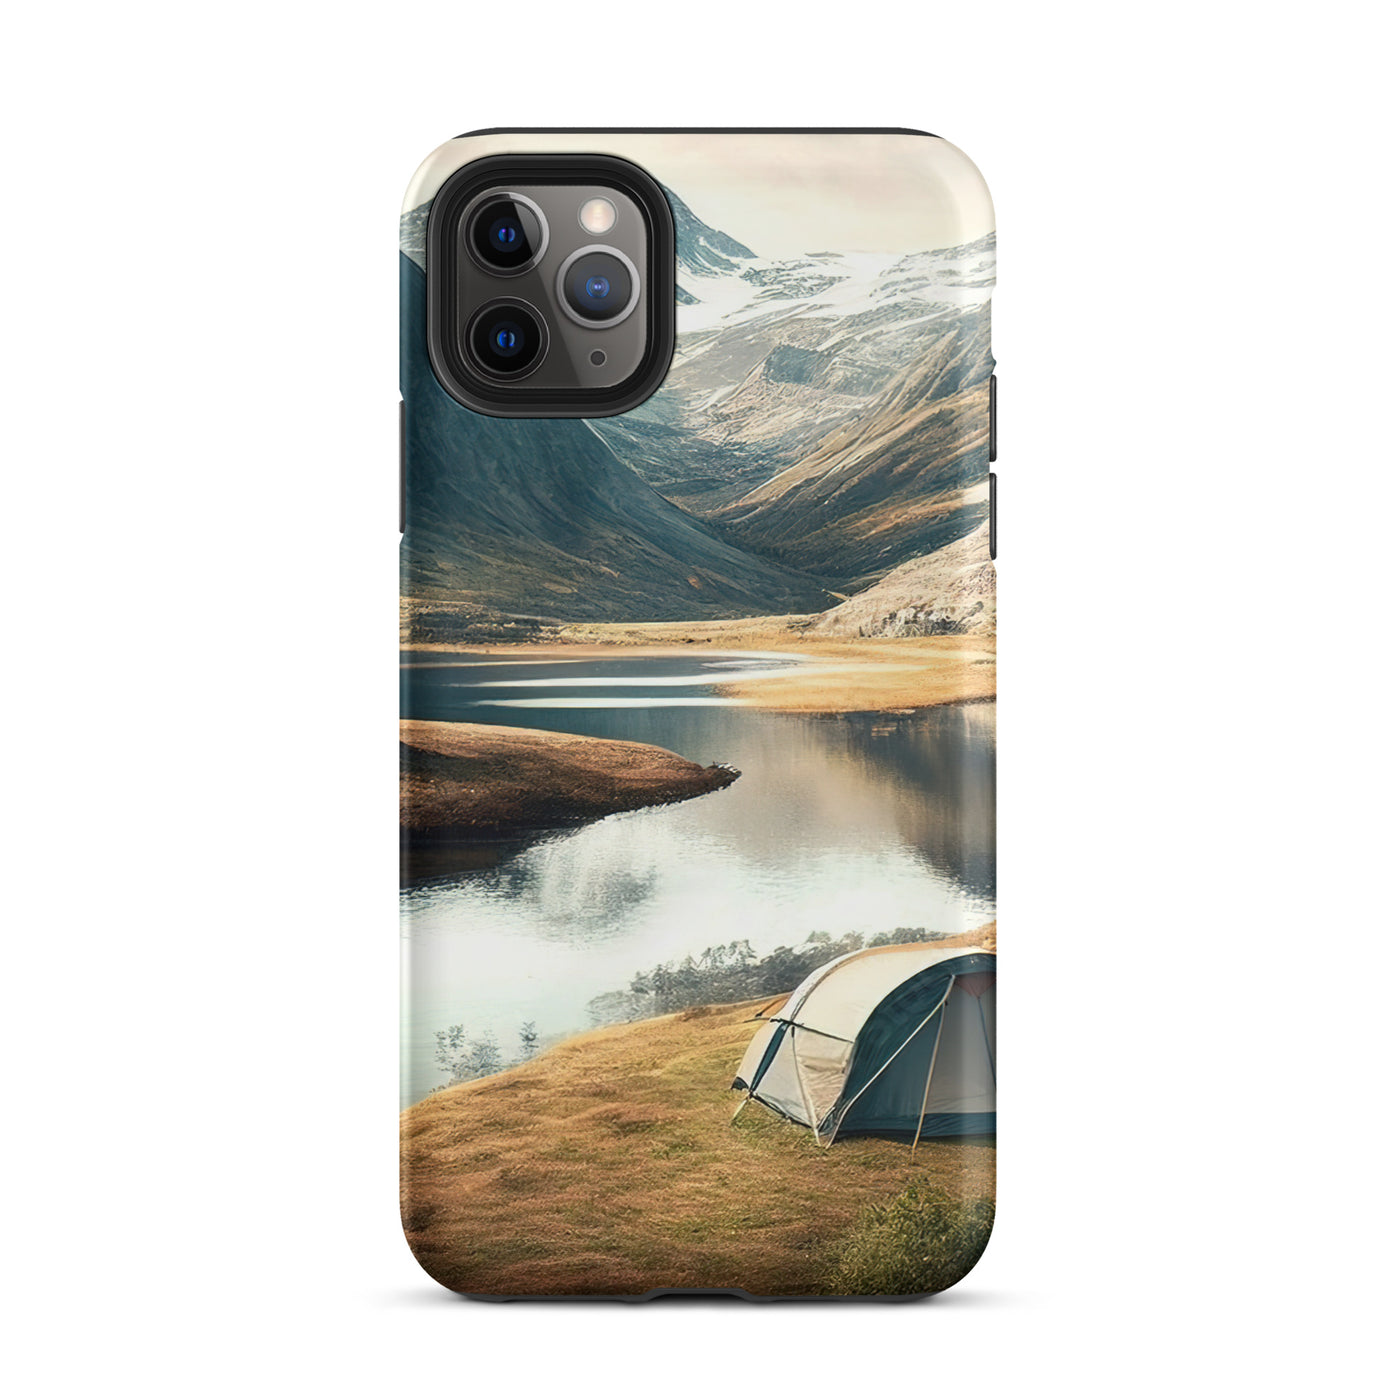 Zelt, Berge und Bergsee - iPhone Schutzhülle (robust) camping xxx iPhone 11 Pro Max